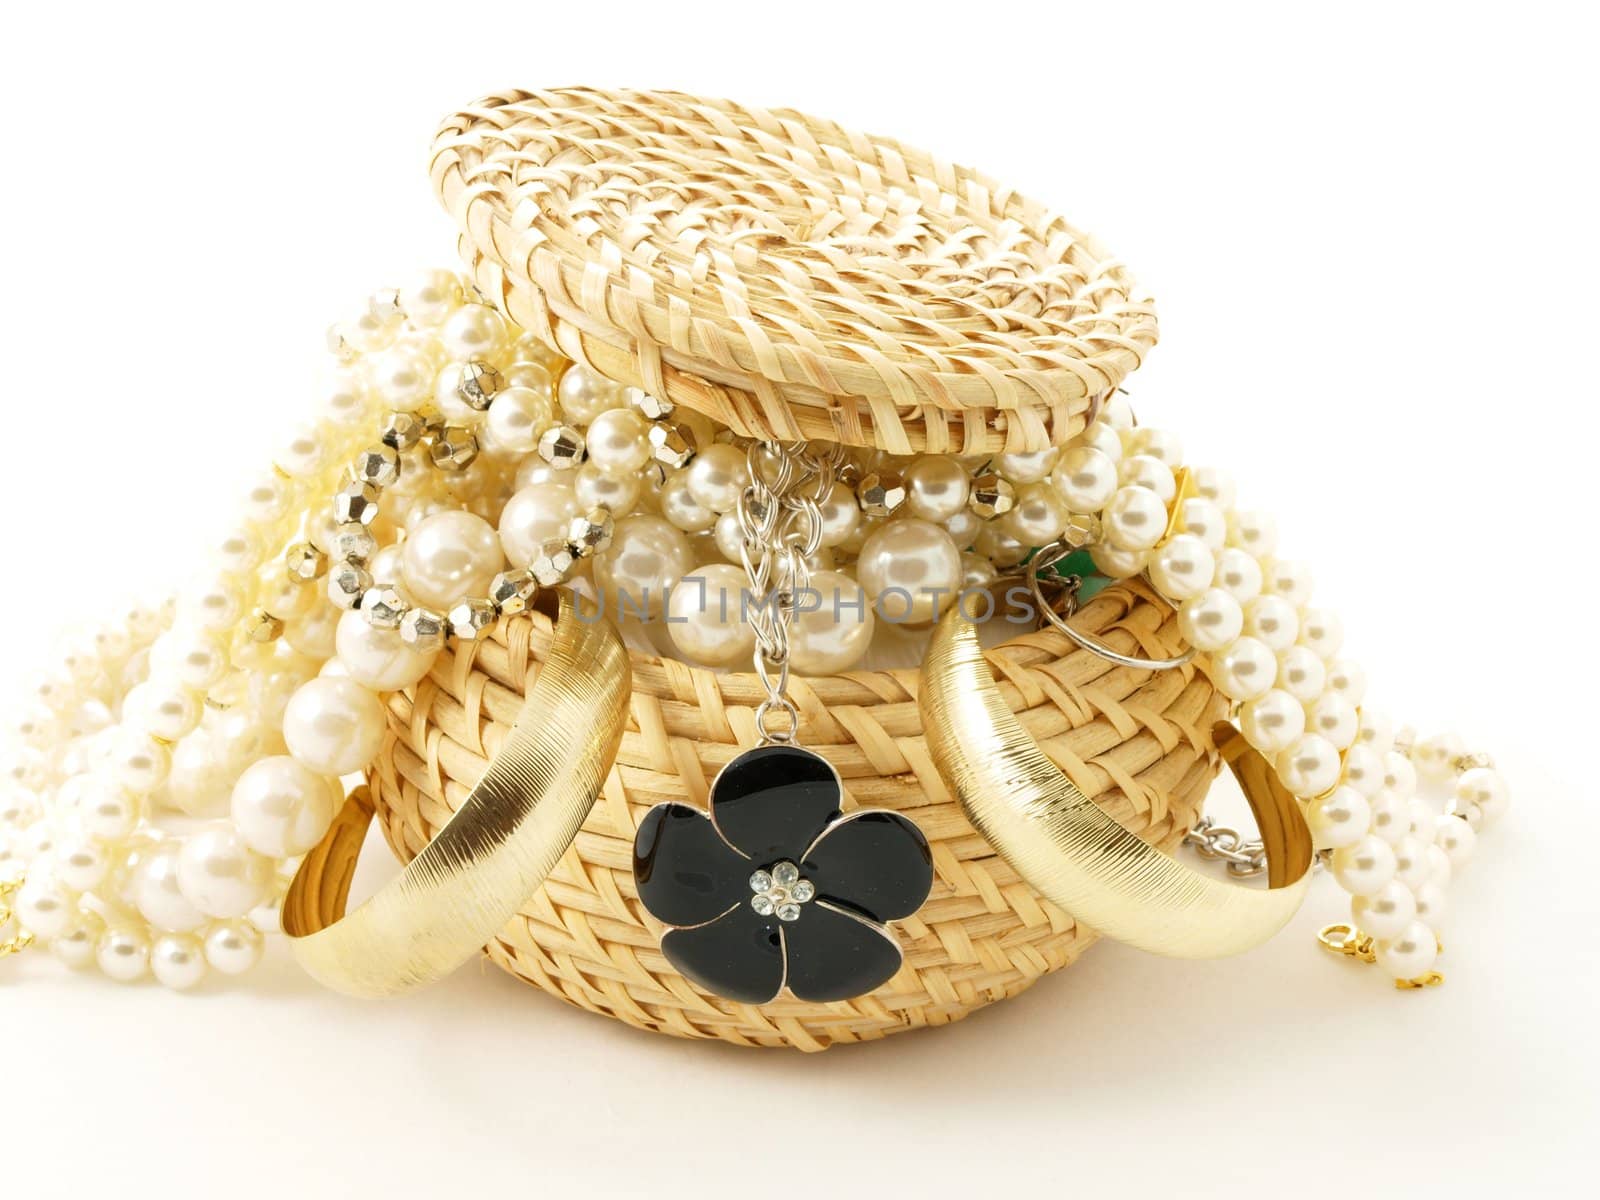 Basket full of jewelery by Arvebettum